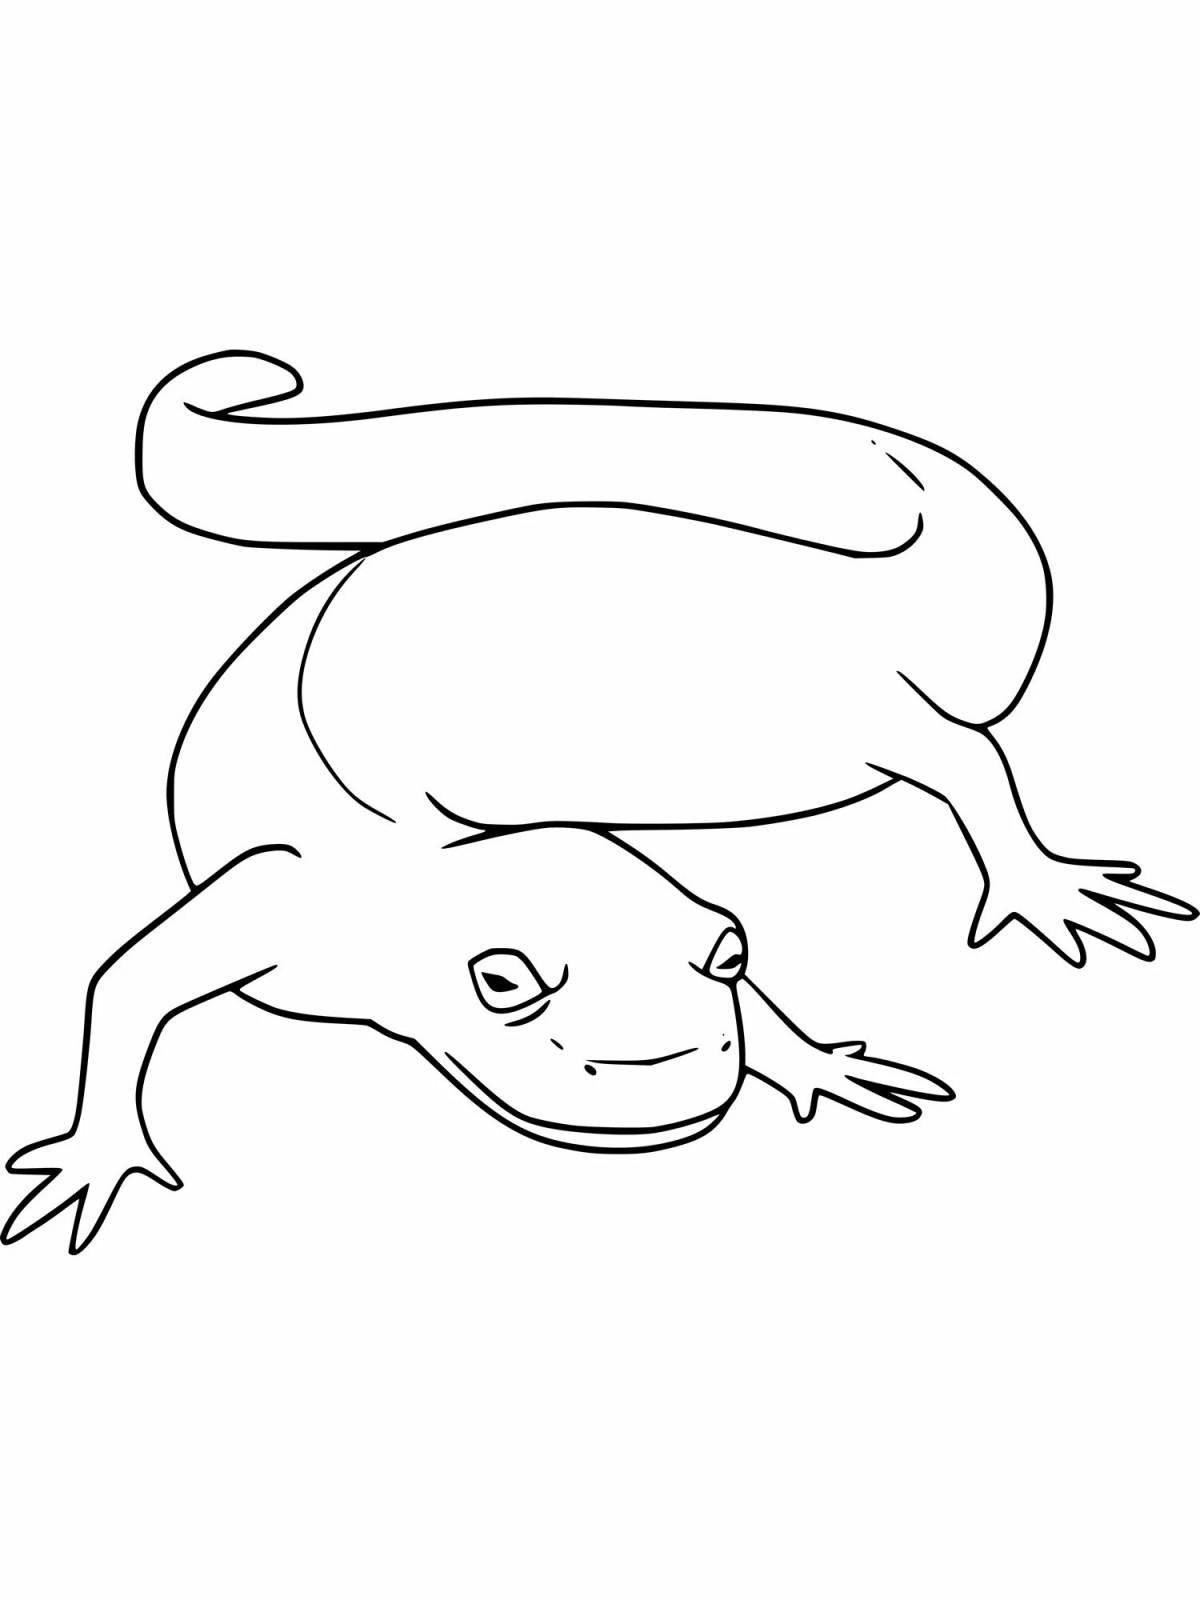 Coloring page graceful salamander